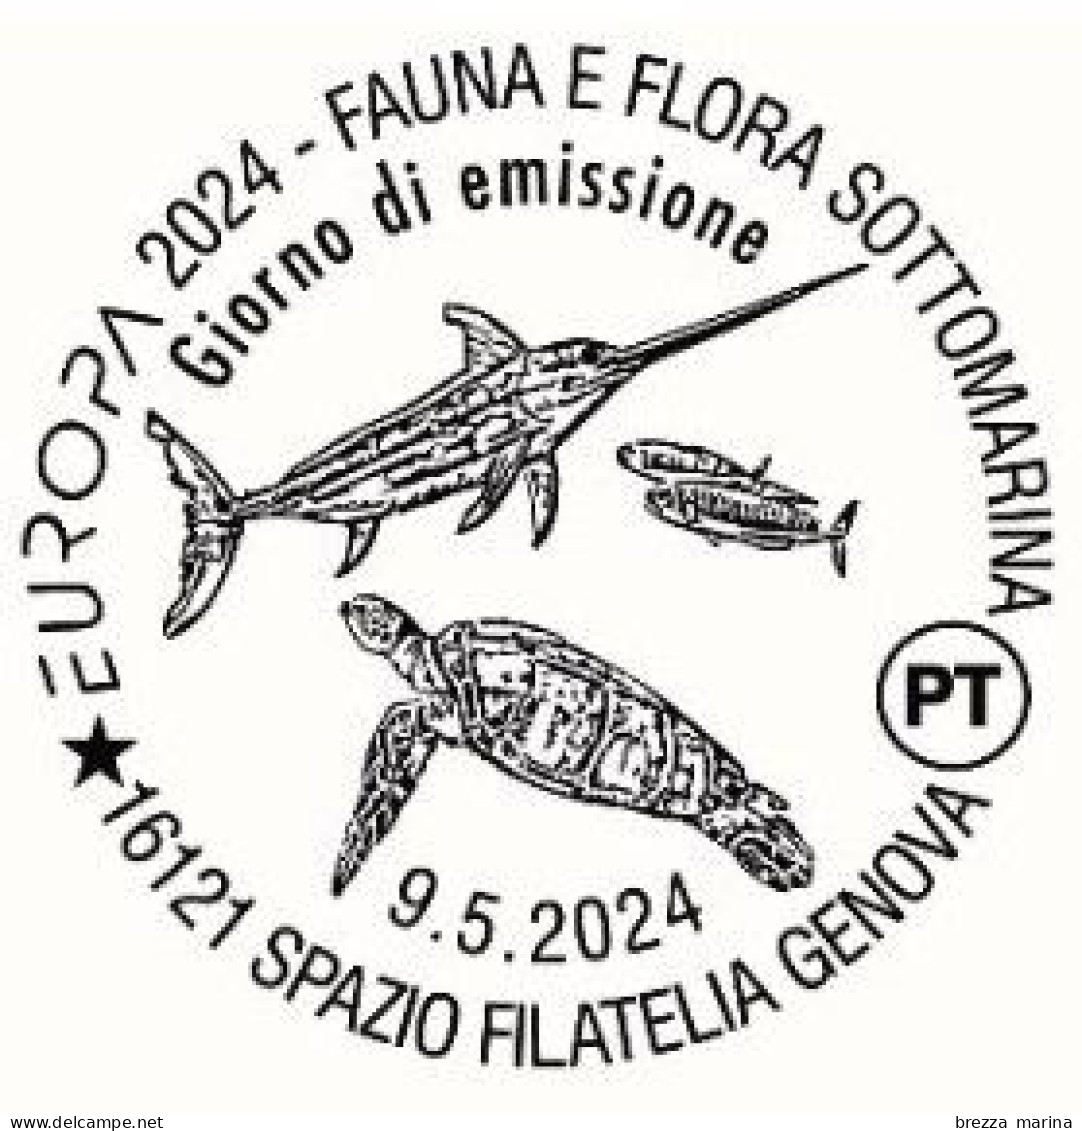 Nuovo - MNH - ITALIA - 2024 - Europa – Fauna E Flora Sottomarina – Tartaruga - B Zona 1 - Barre 2448 - Barcodes